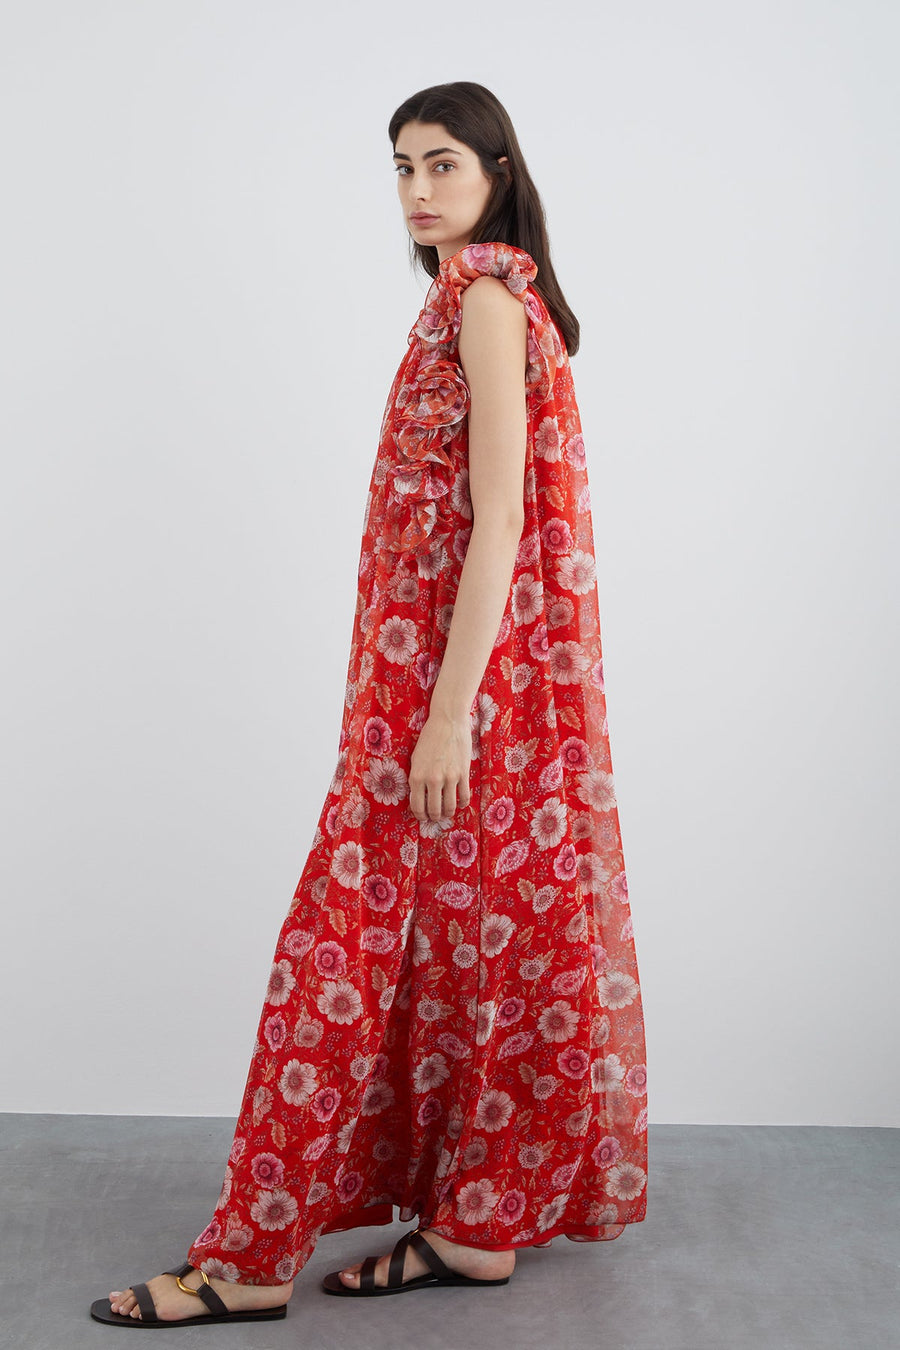 Floral Patterned Red Chiffon Dress | Porterist